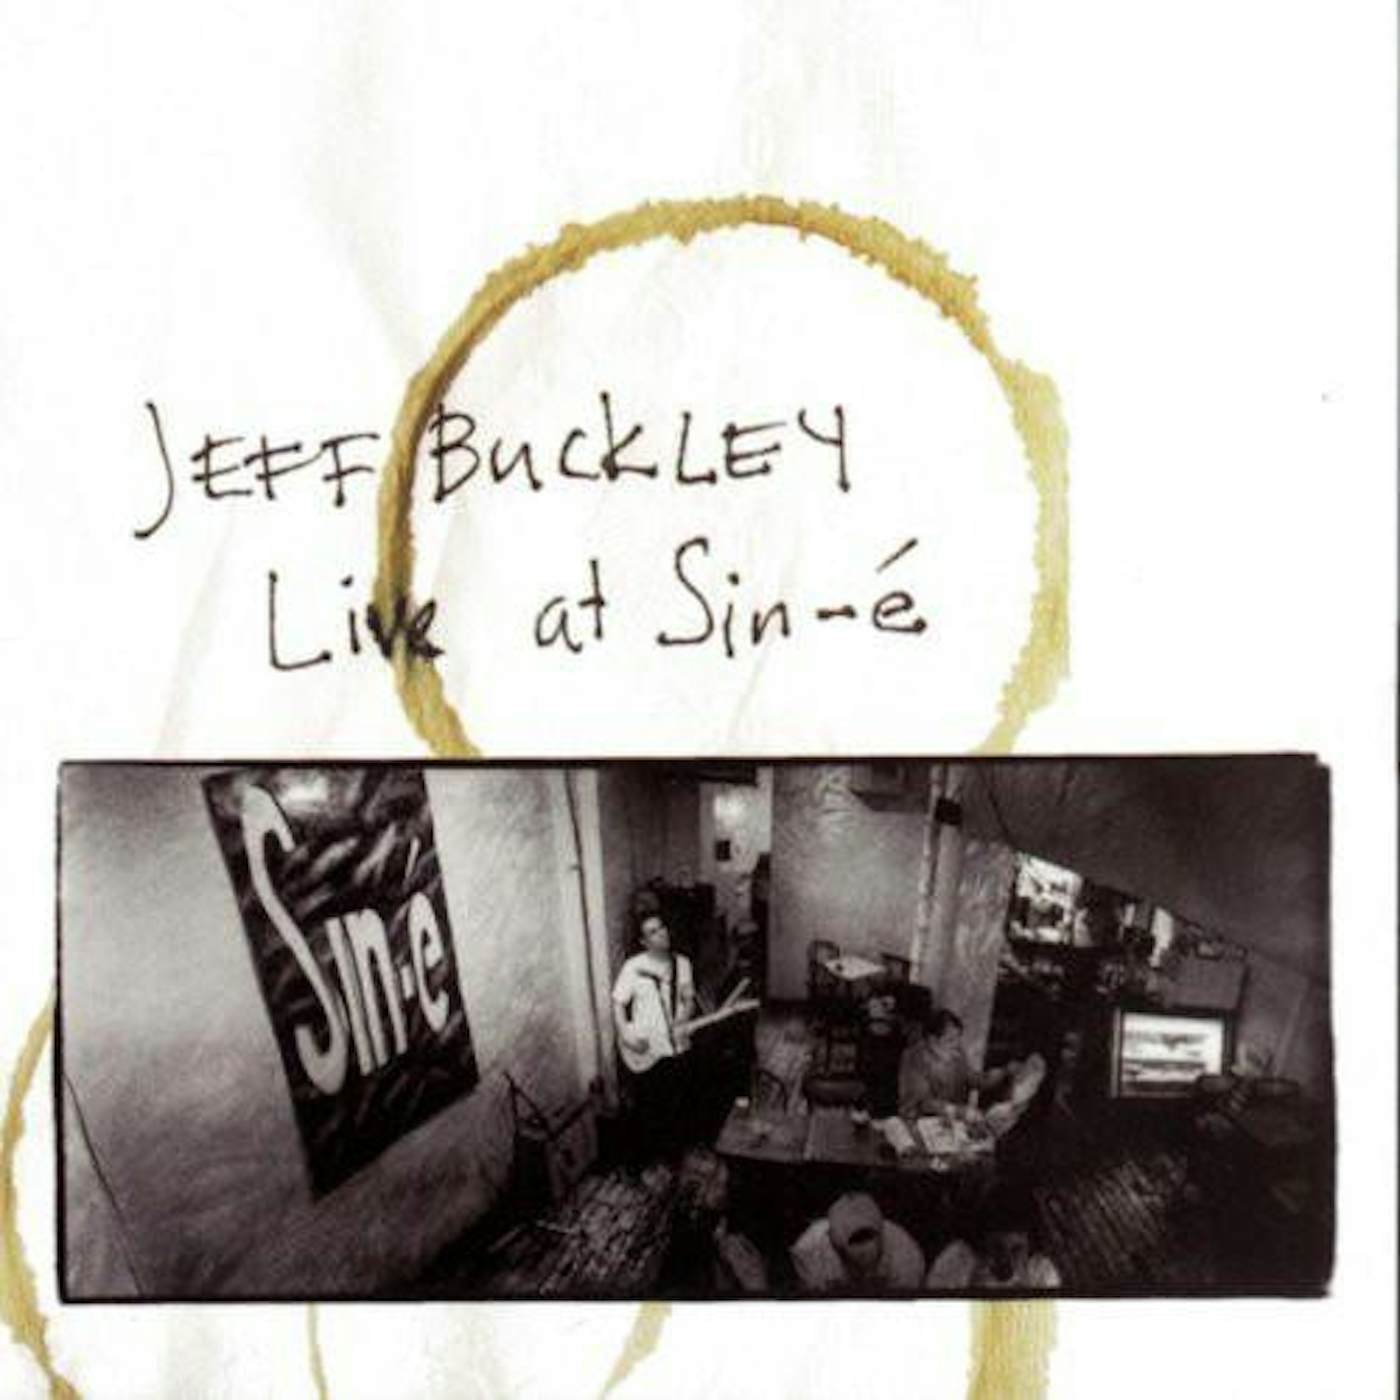 Jeff Buckley LIVE AT SINE-E CD